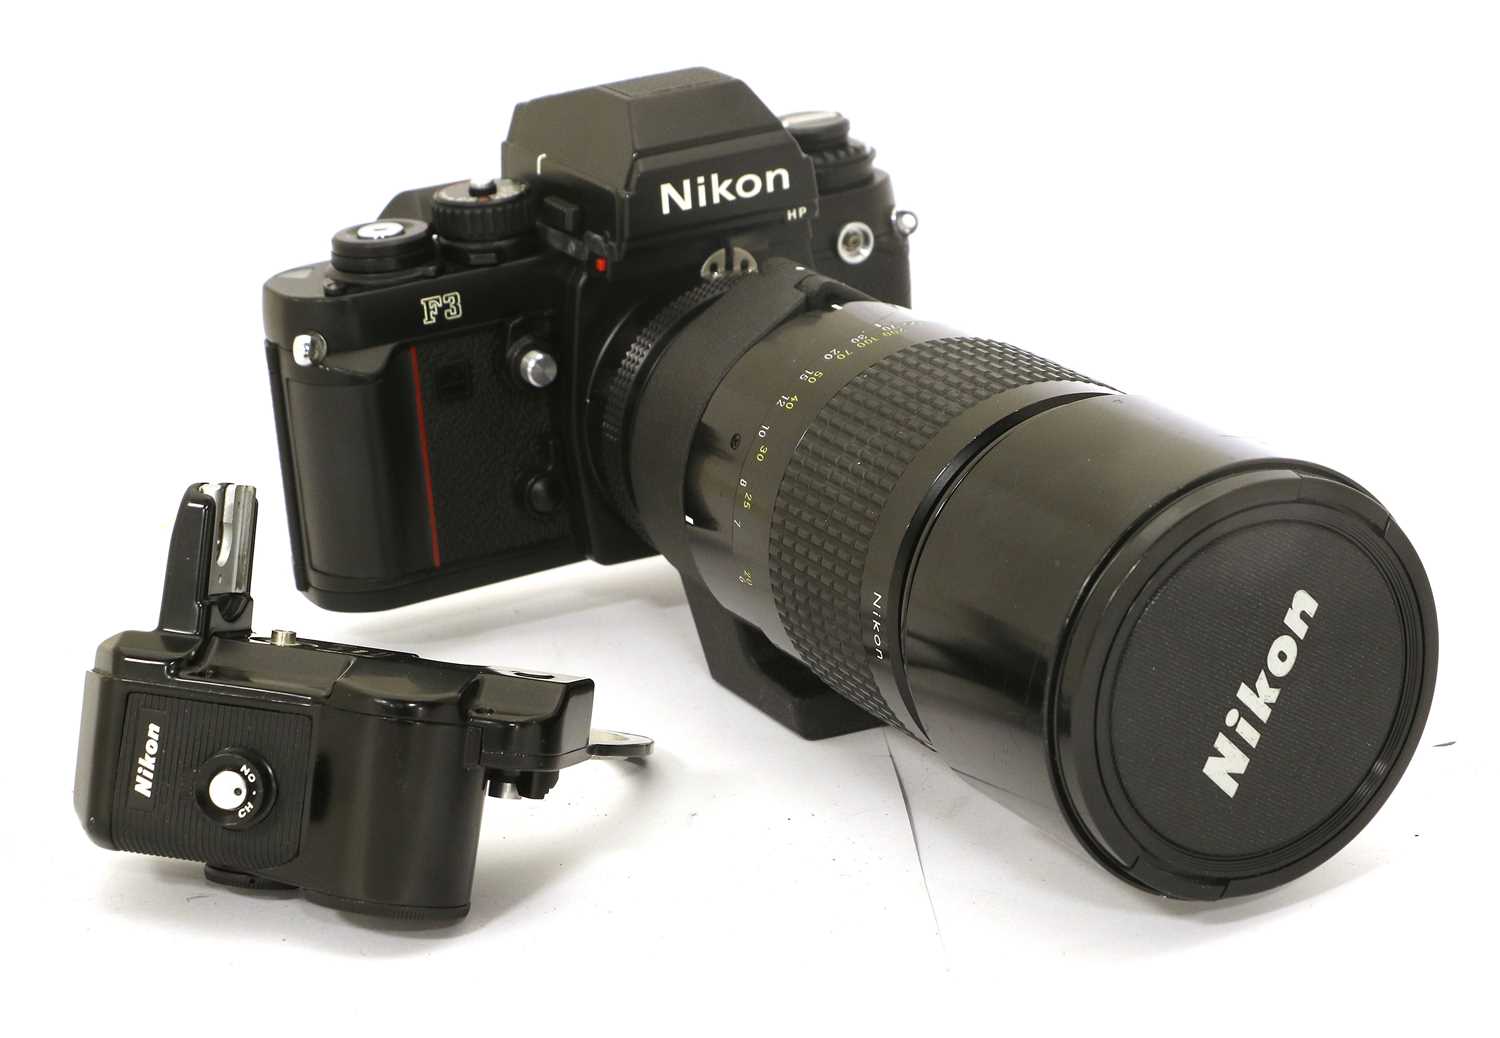 Nikon F3 Camera